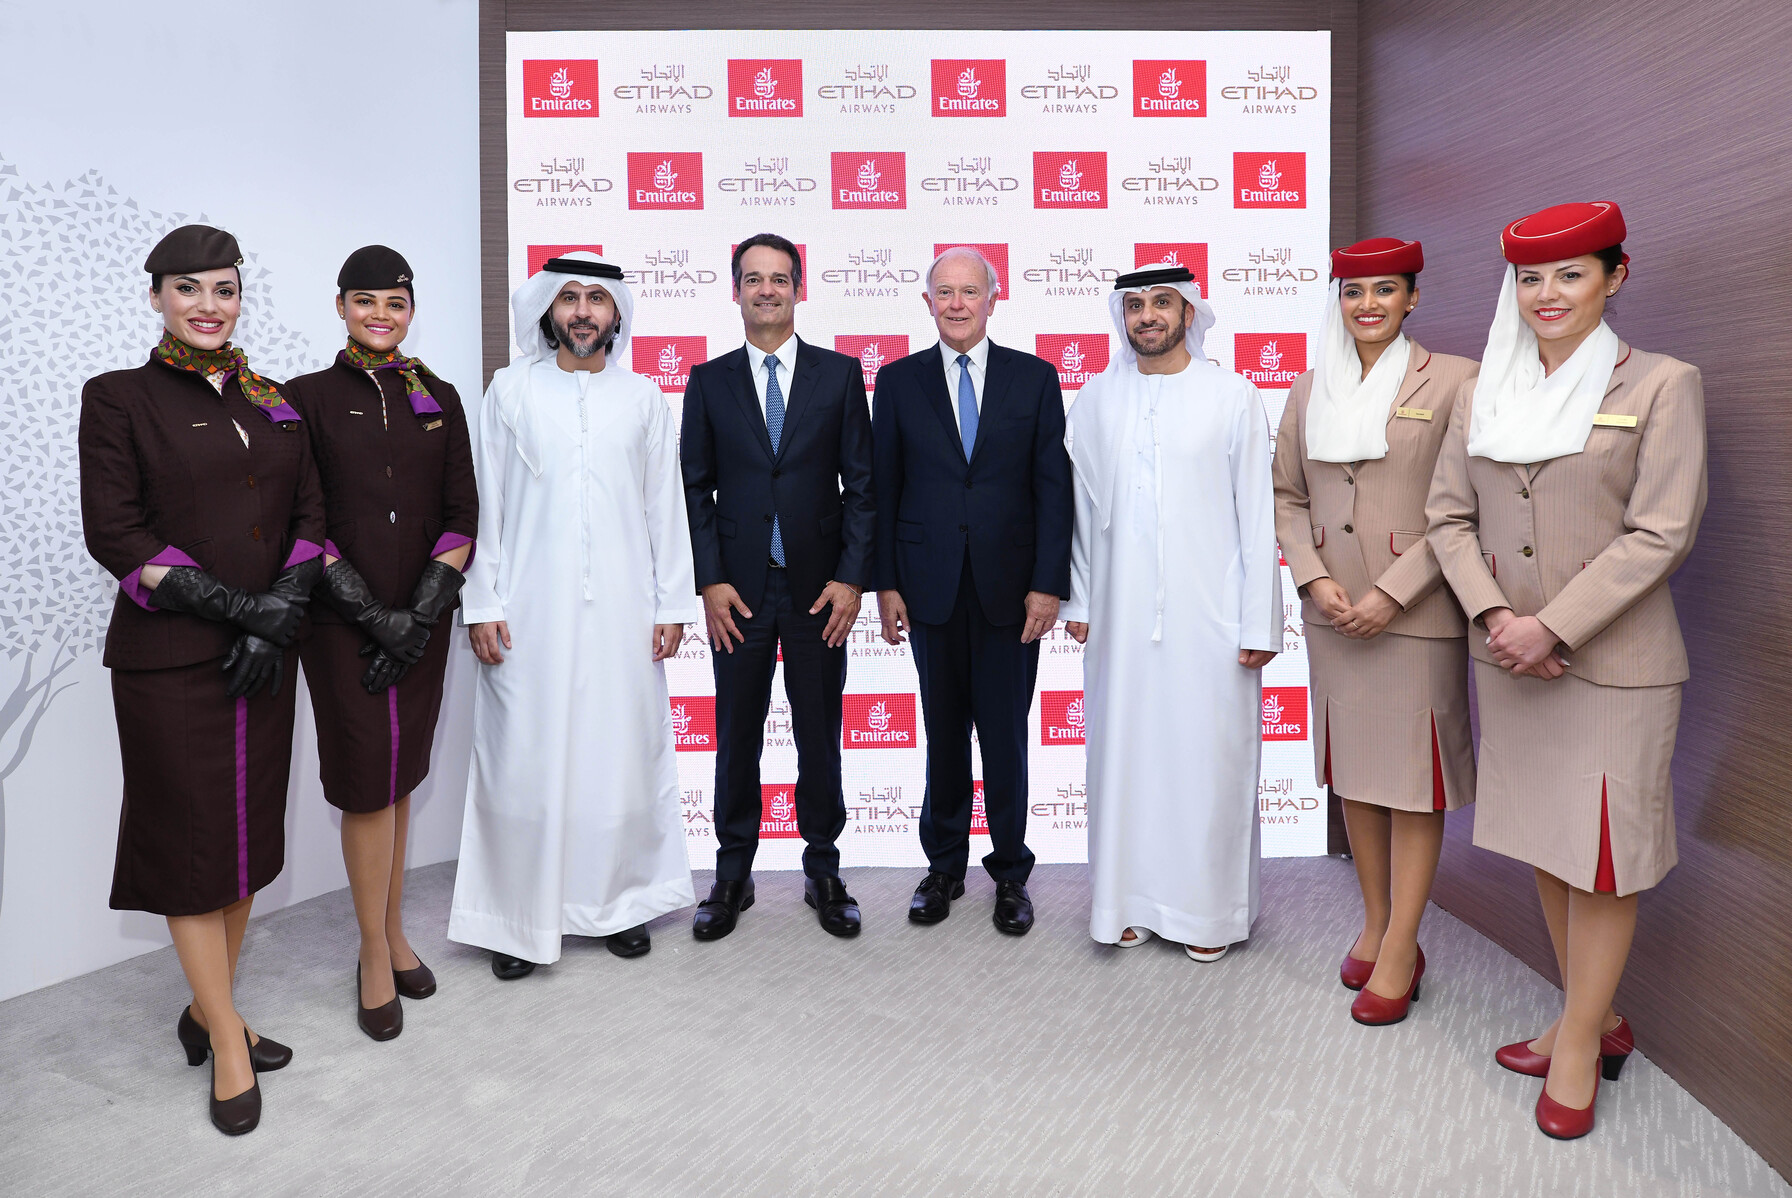 Emirates και Etihad Airways επεκτείνουν τη συνεργασία τους